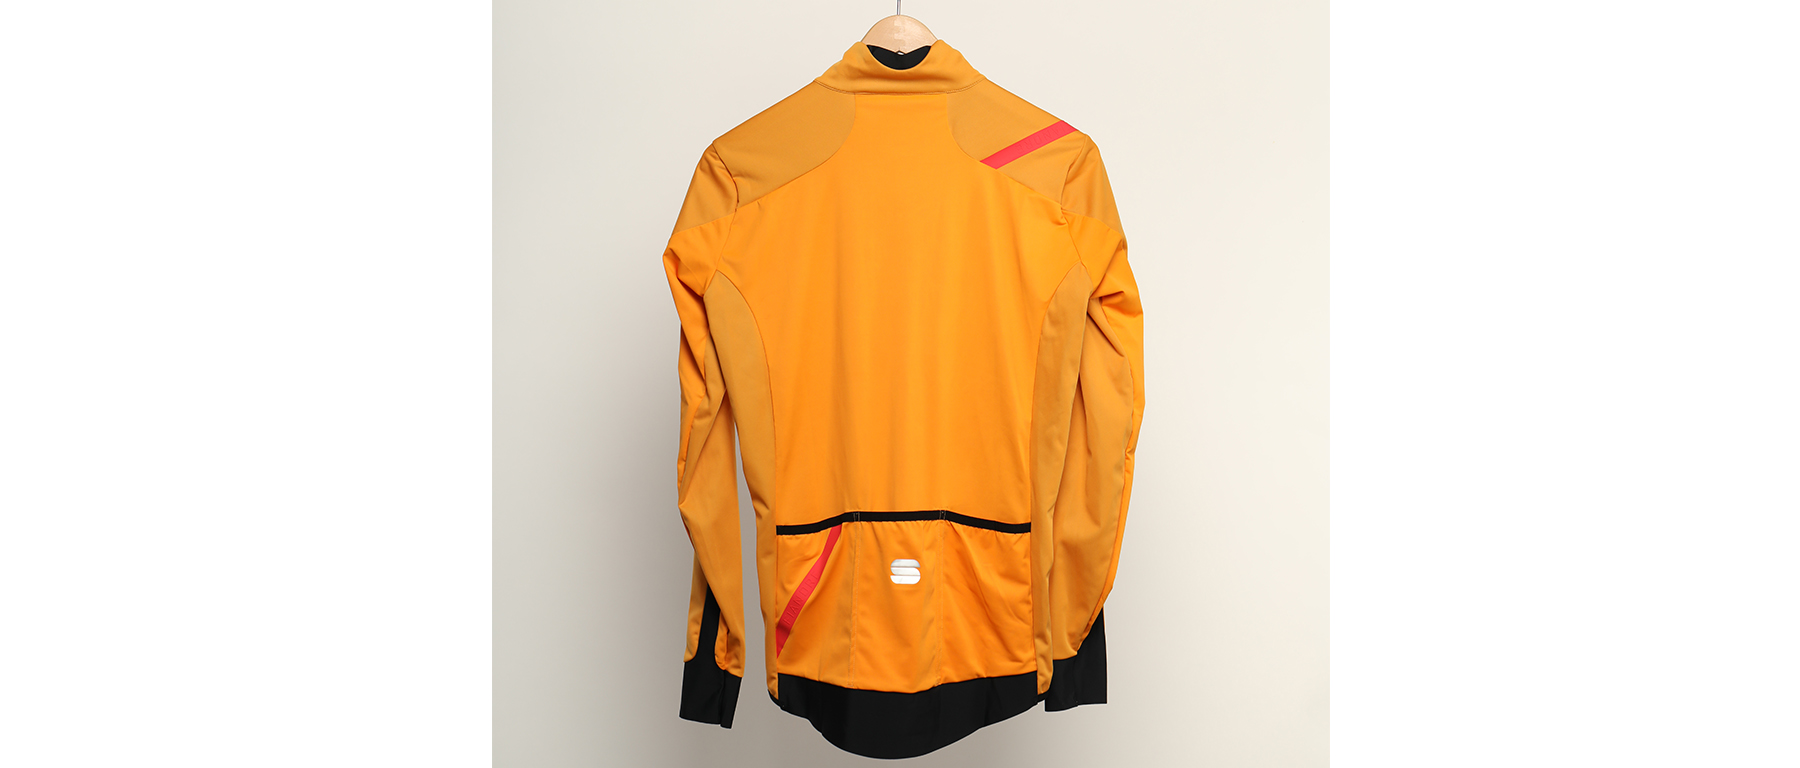 Sportful Fiandre Light Norain Jacket SAMPLE